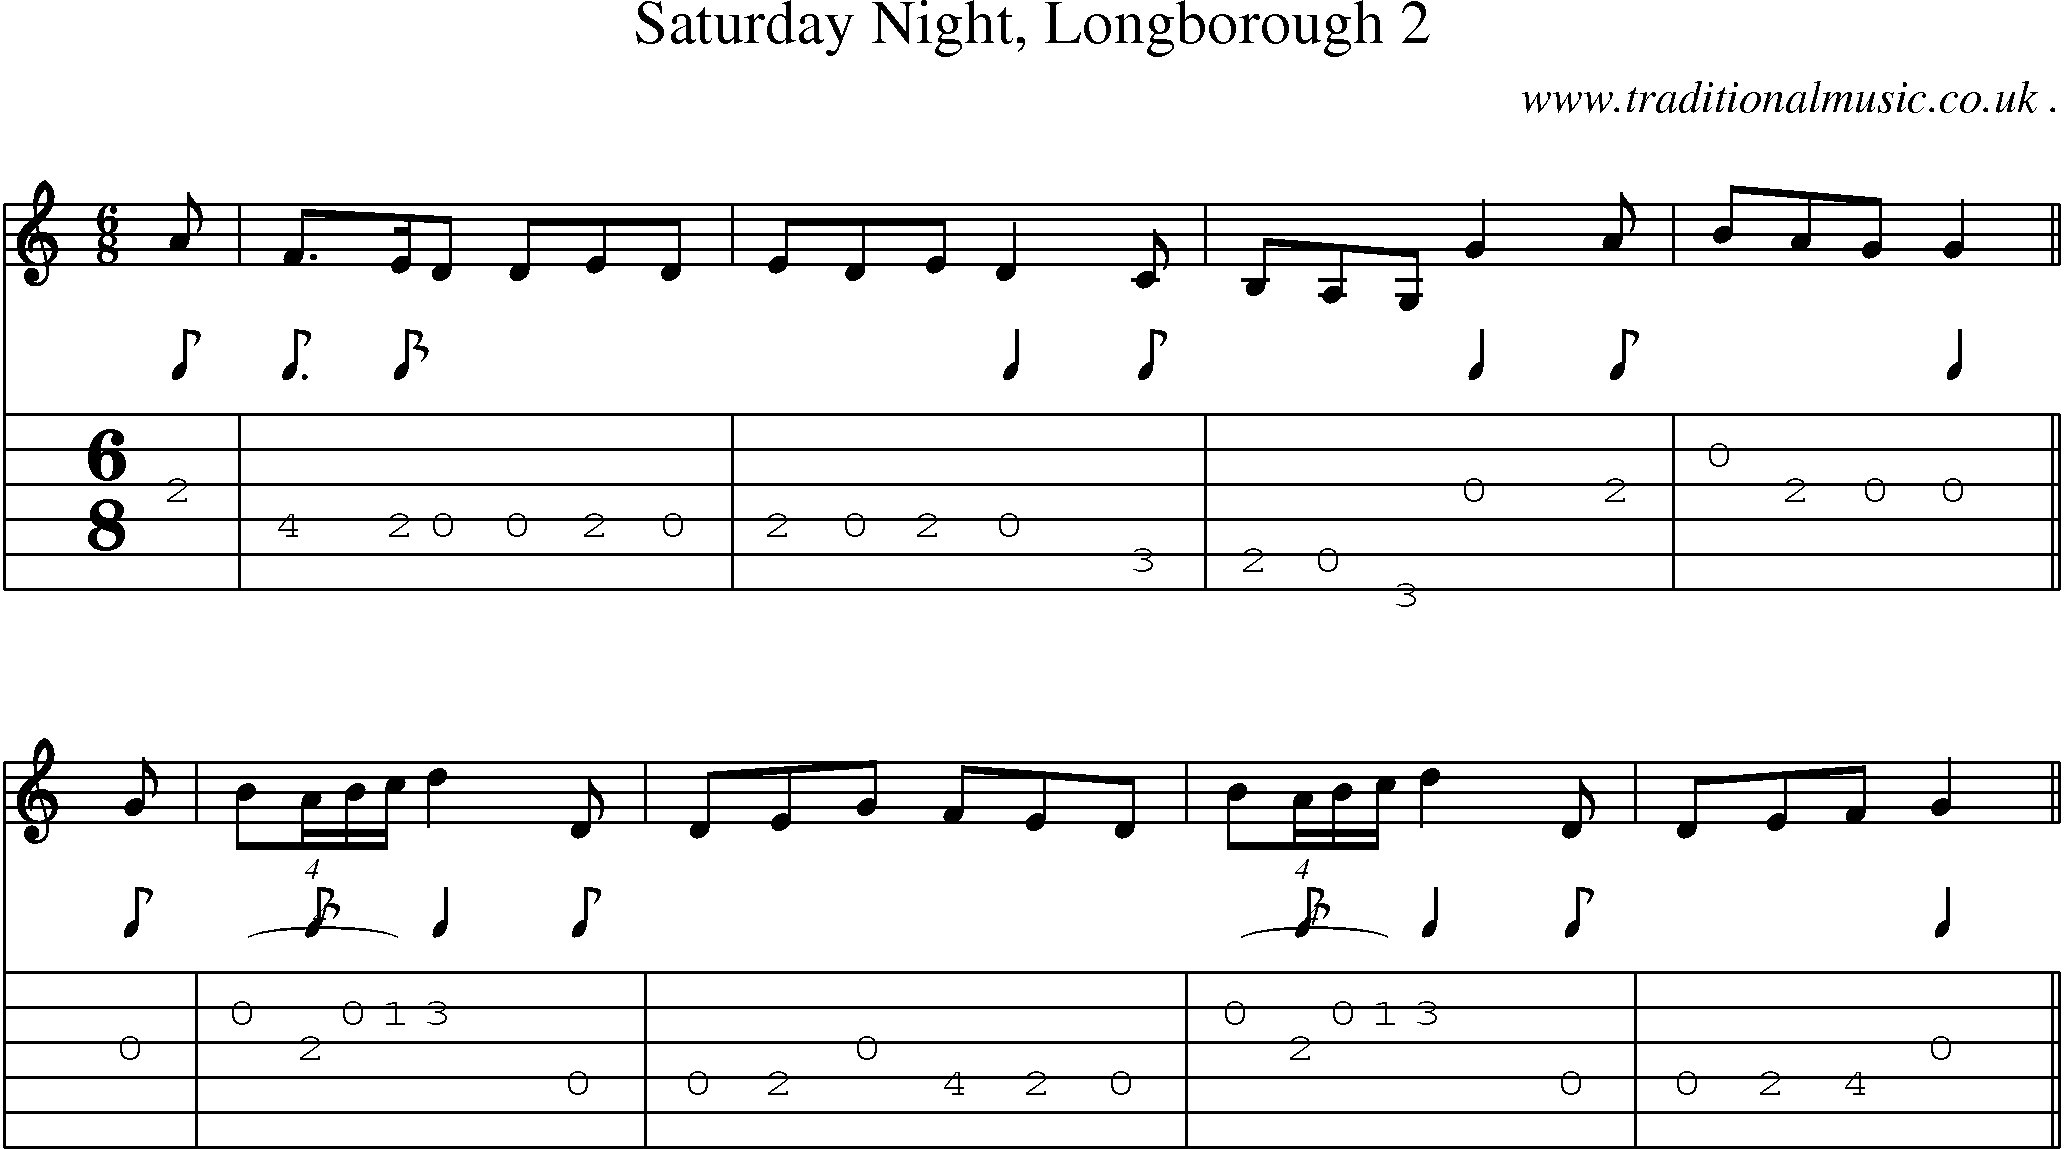 Sheet-Music and Guitar Tabs for Saturday Night Longborough 2